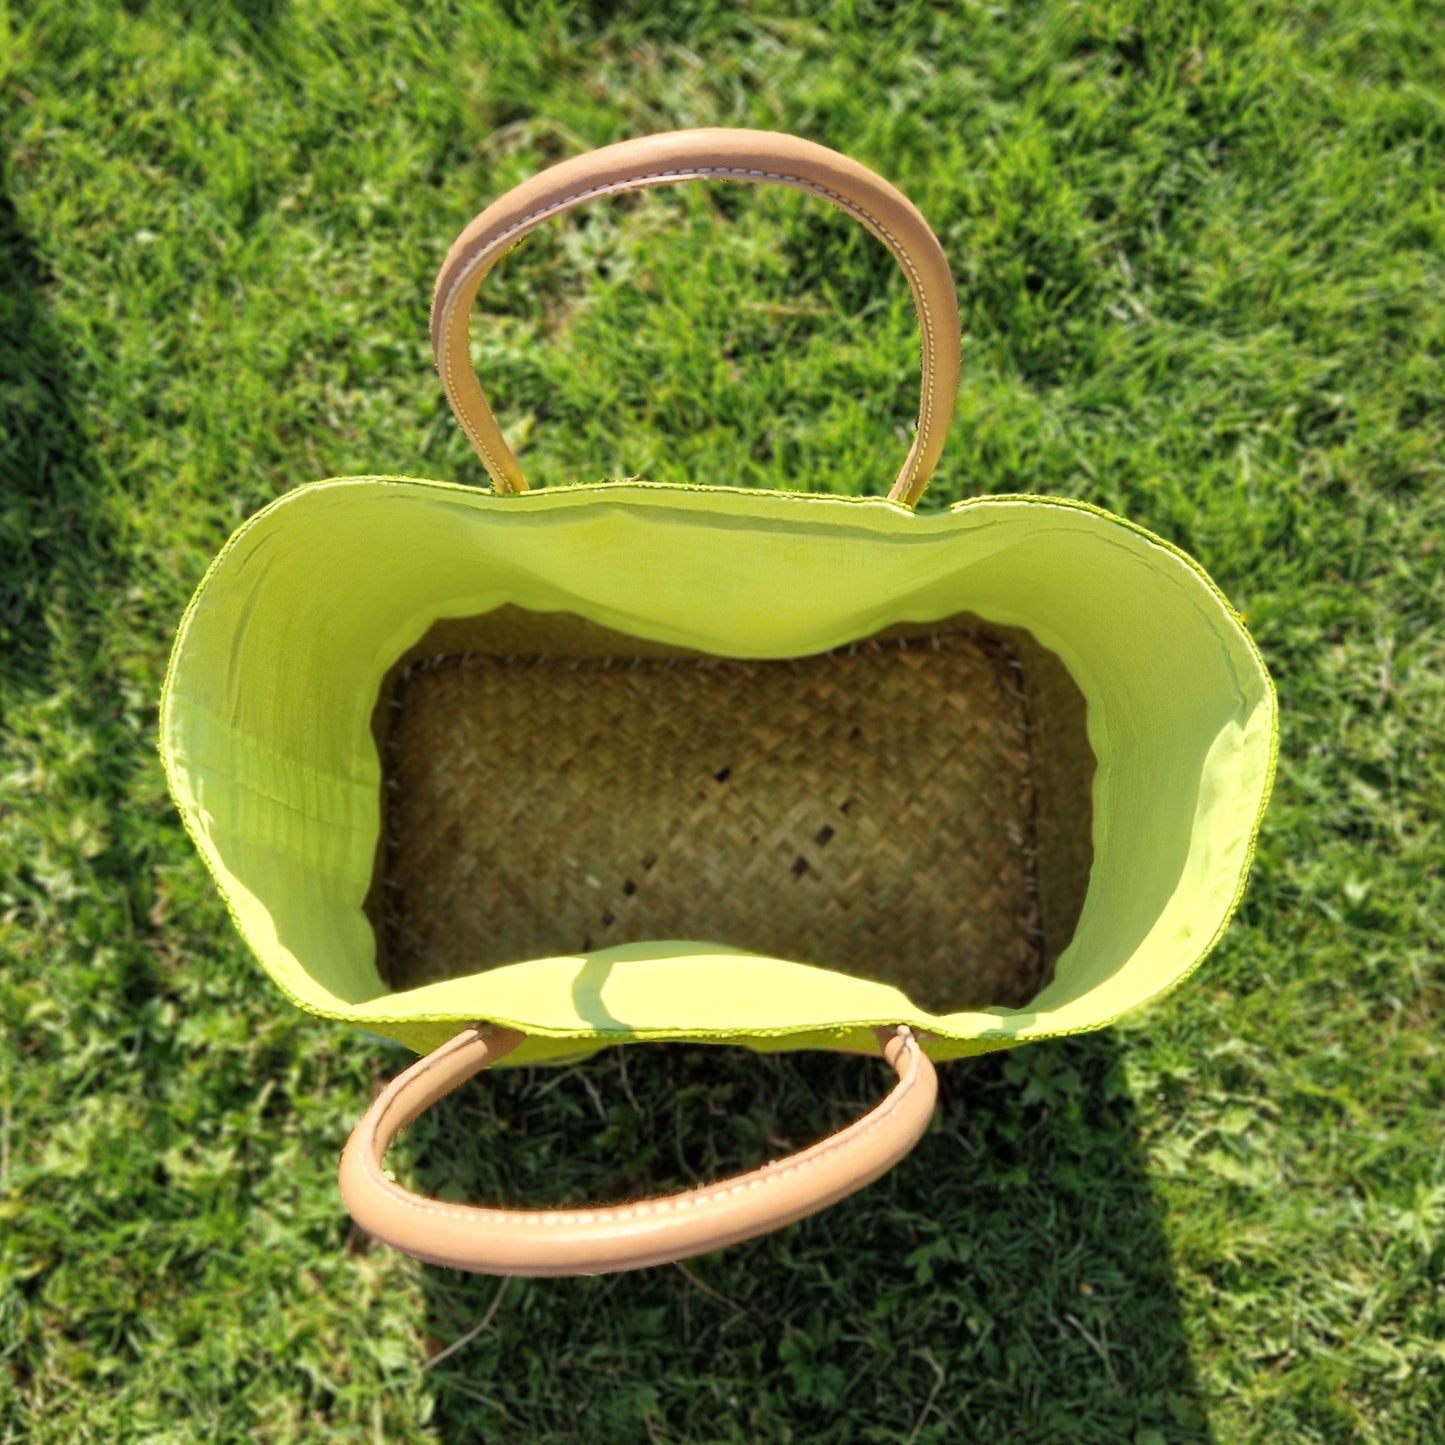 View inside a lime green raffia basket.